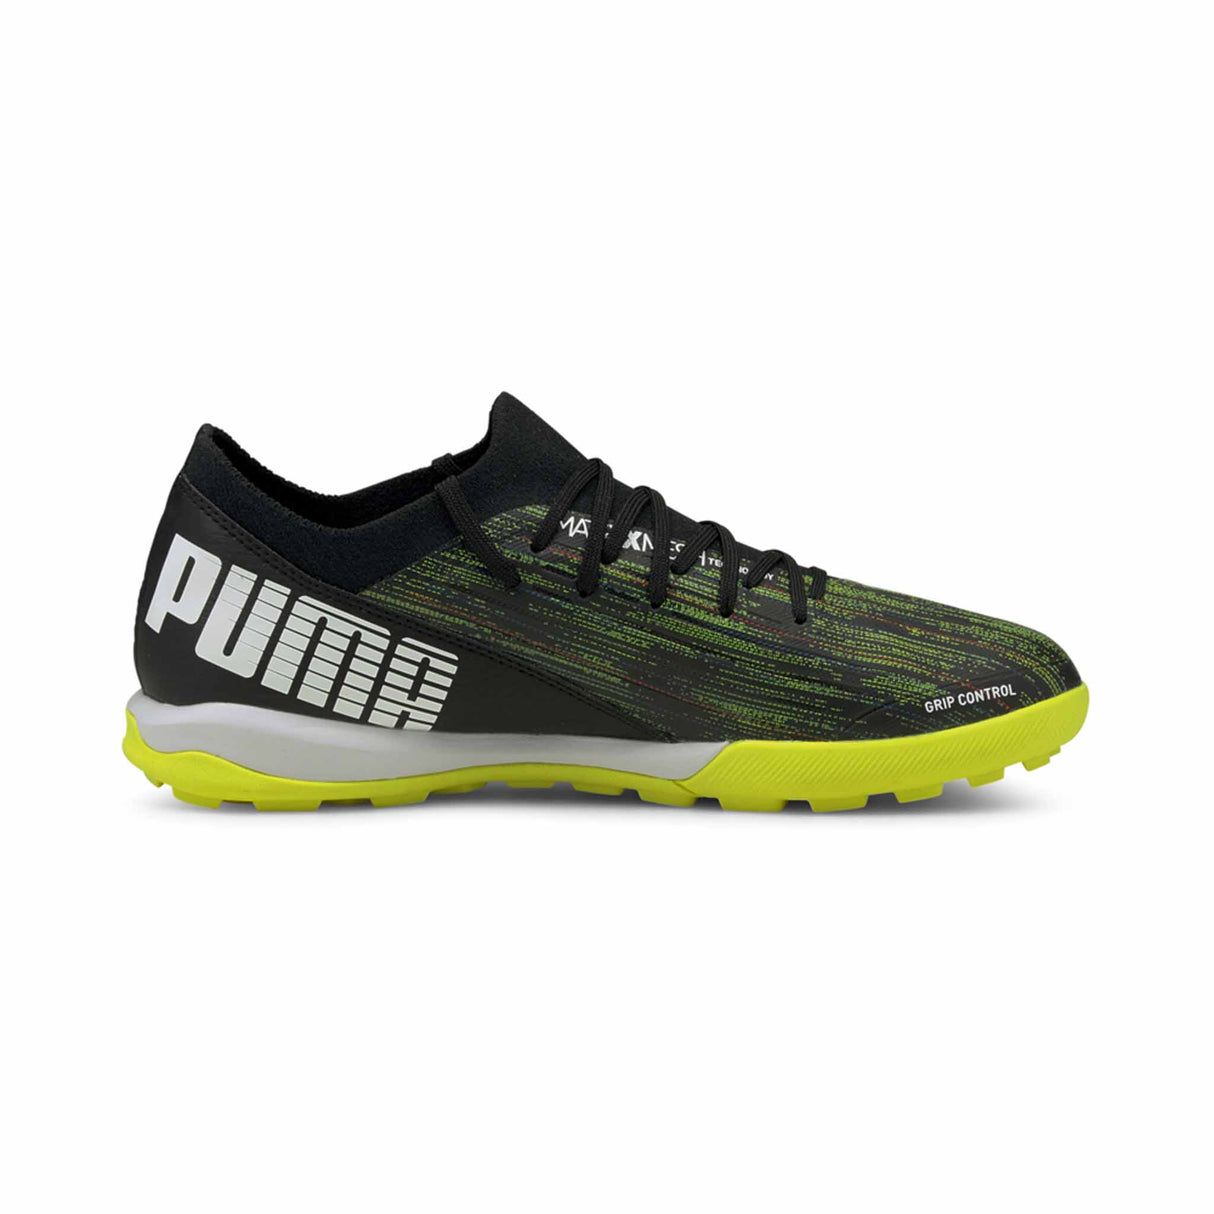 Puma Ultra 3.2 TT chaussures de soccer turf - Puma Black / Puma White / Yellow Alert - côté